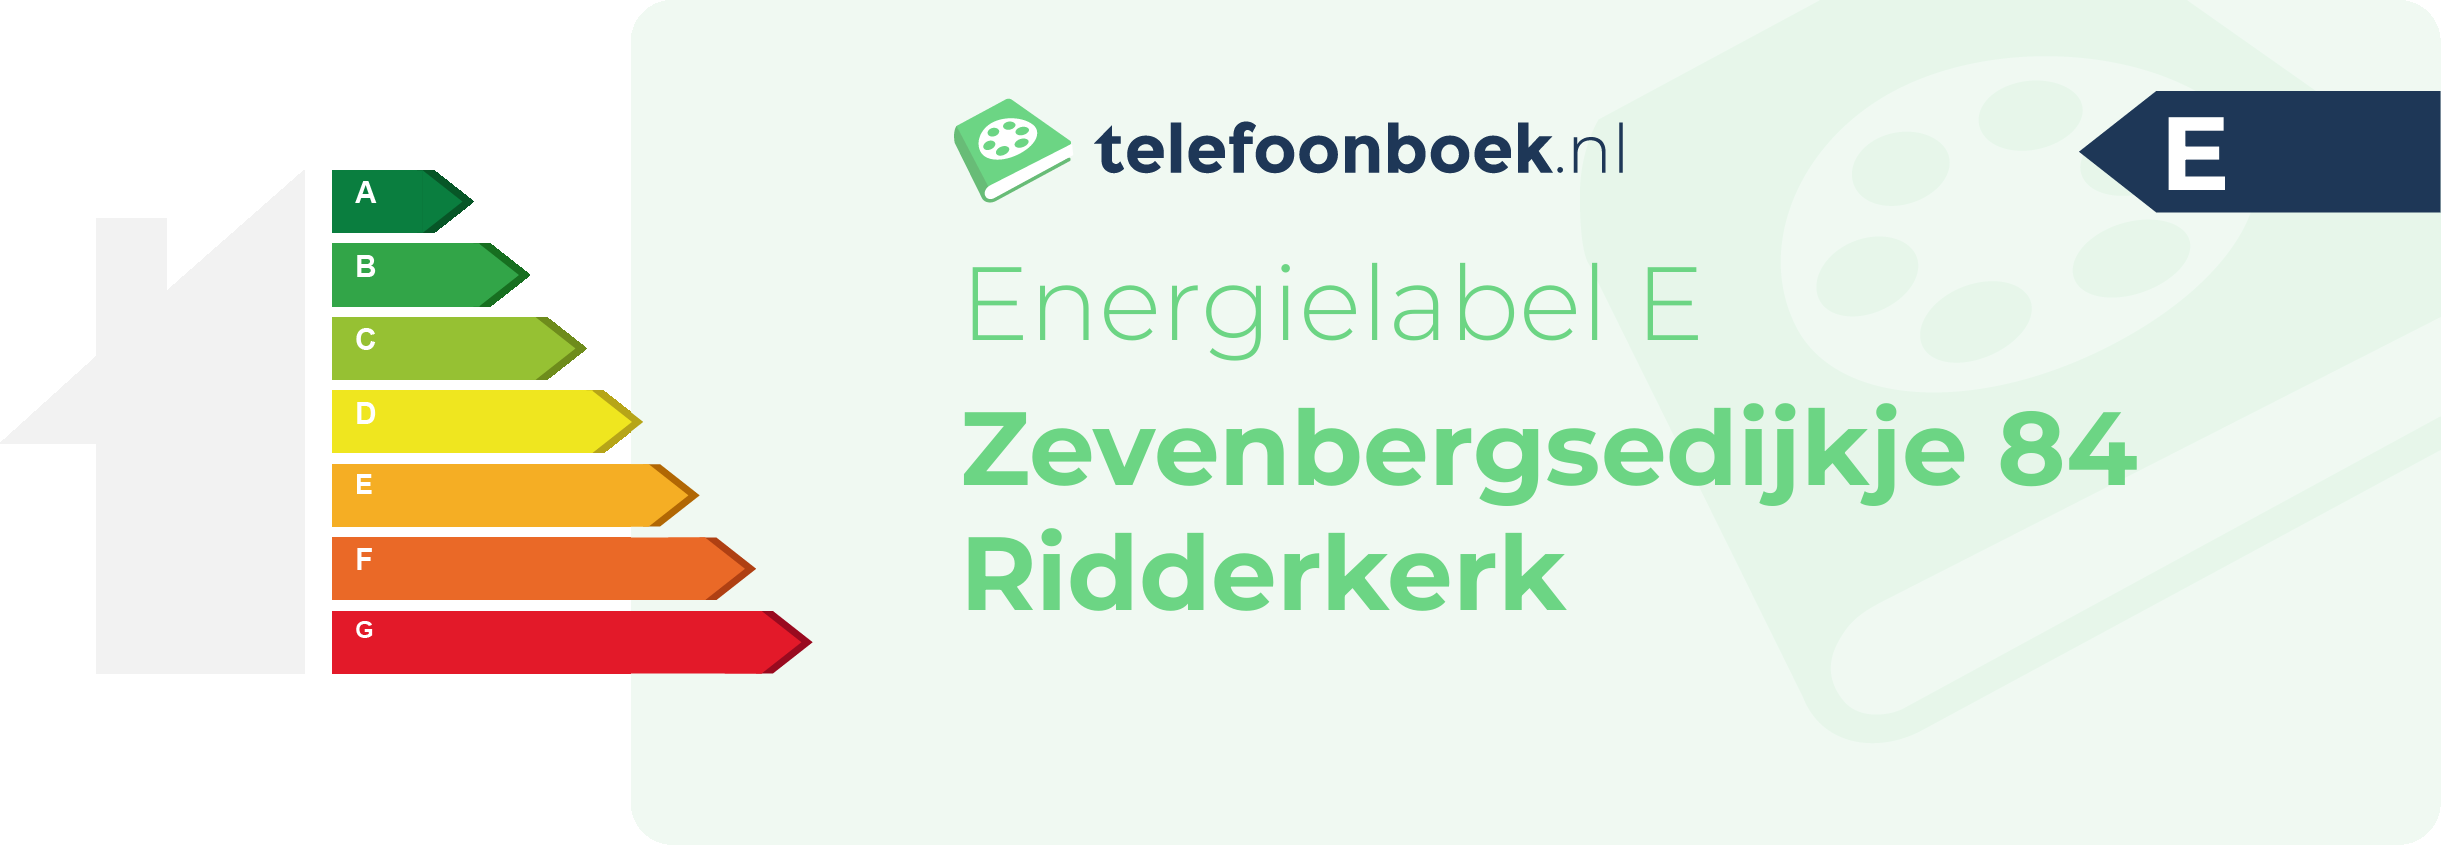 Energielabel Zevenbergsedijkje 84 Ridderkerk